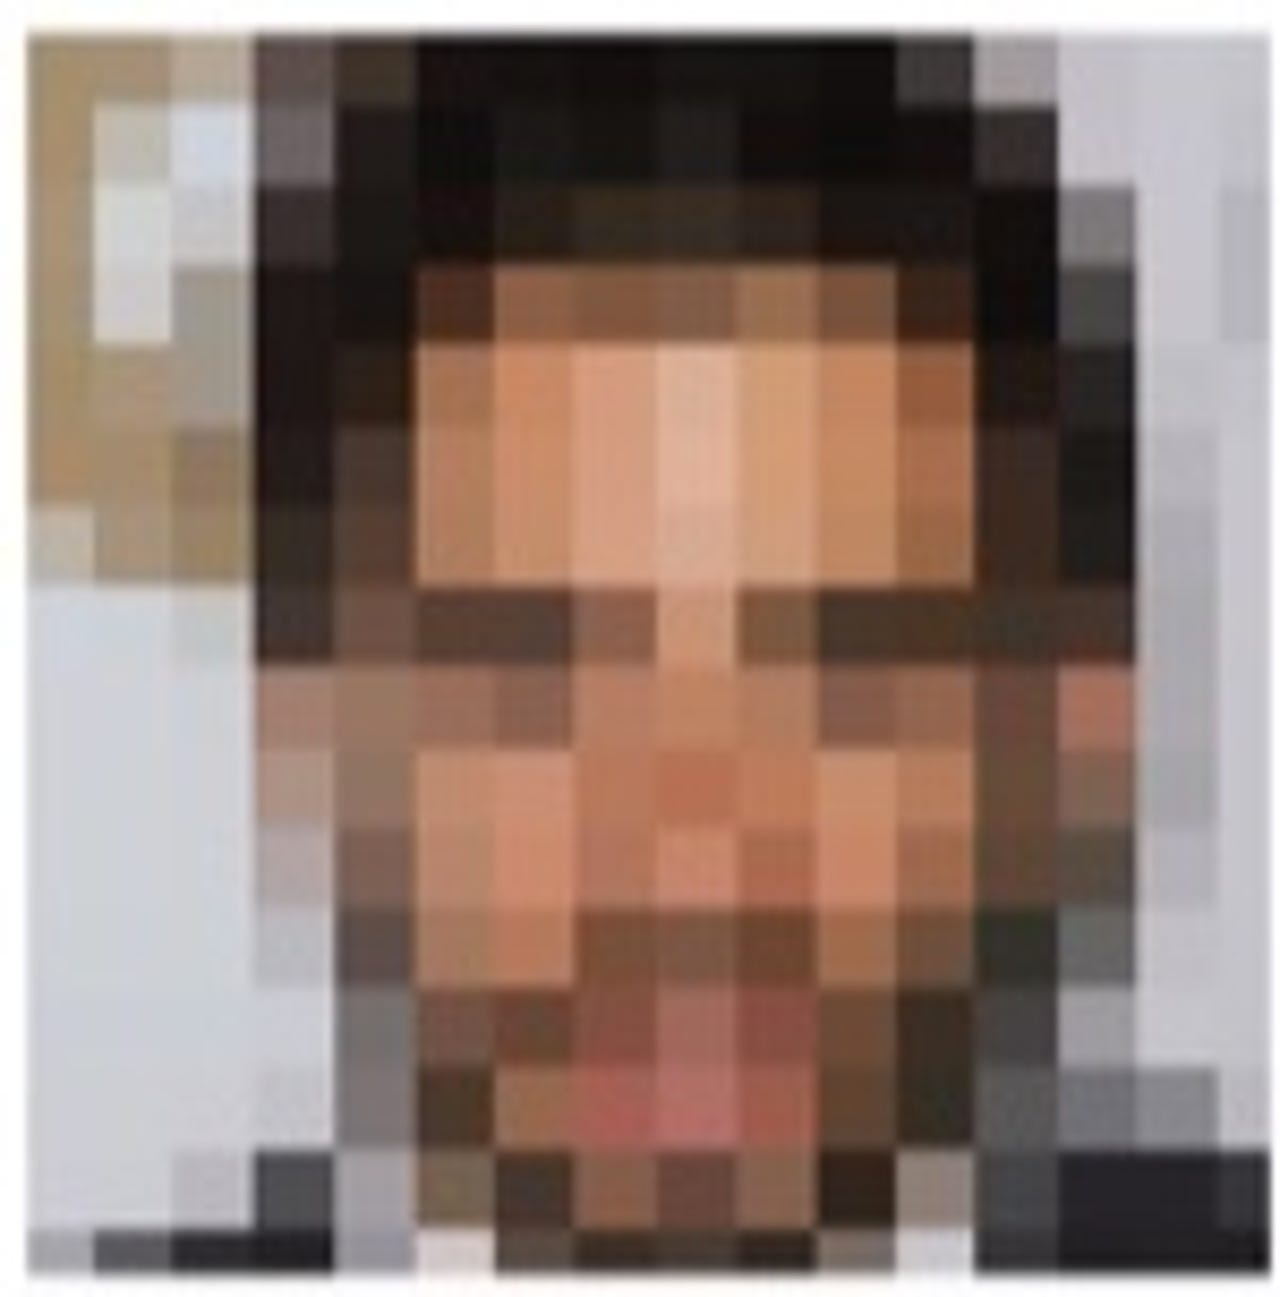 pixelated-face.jpg